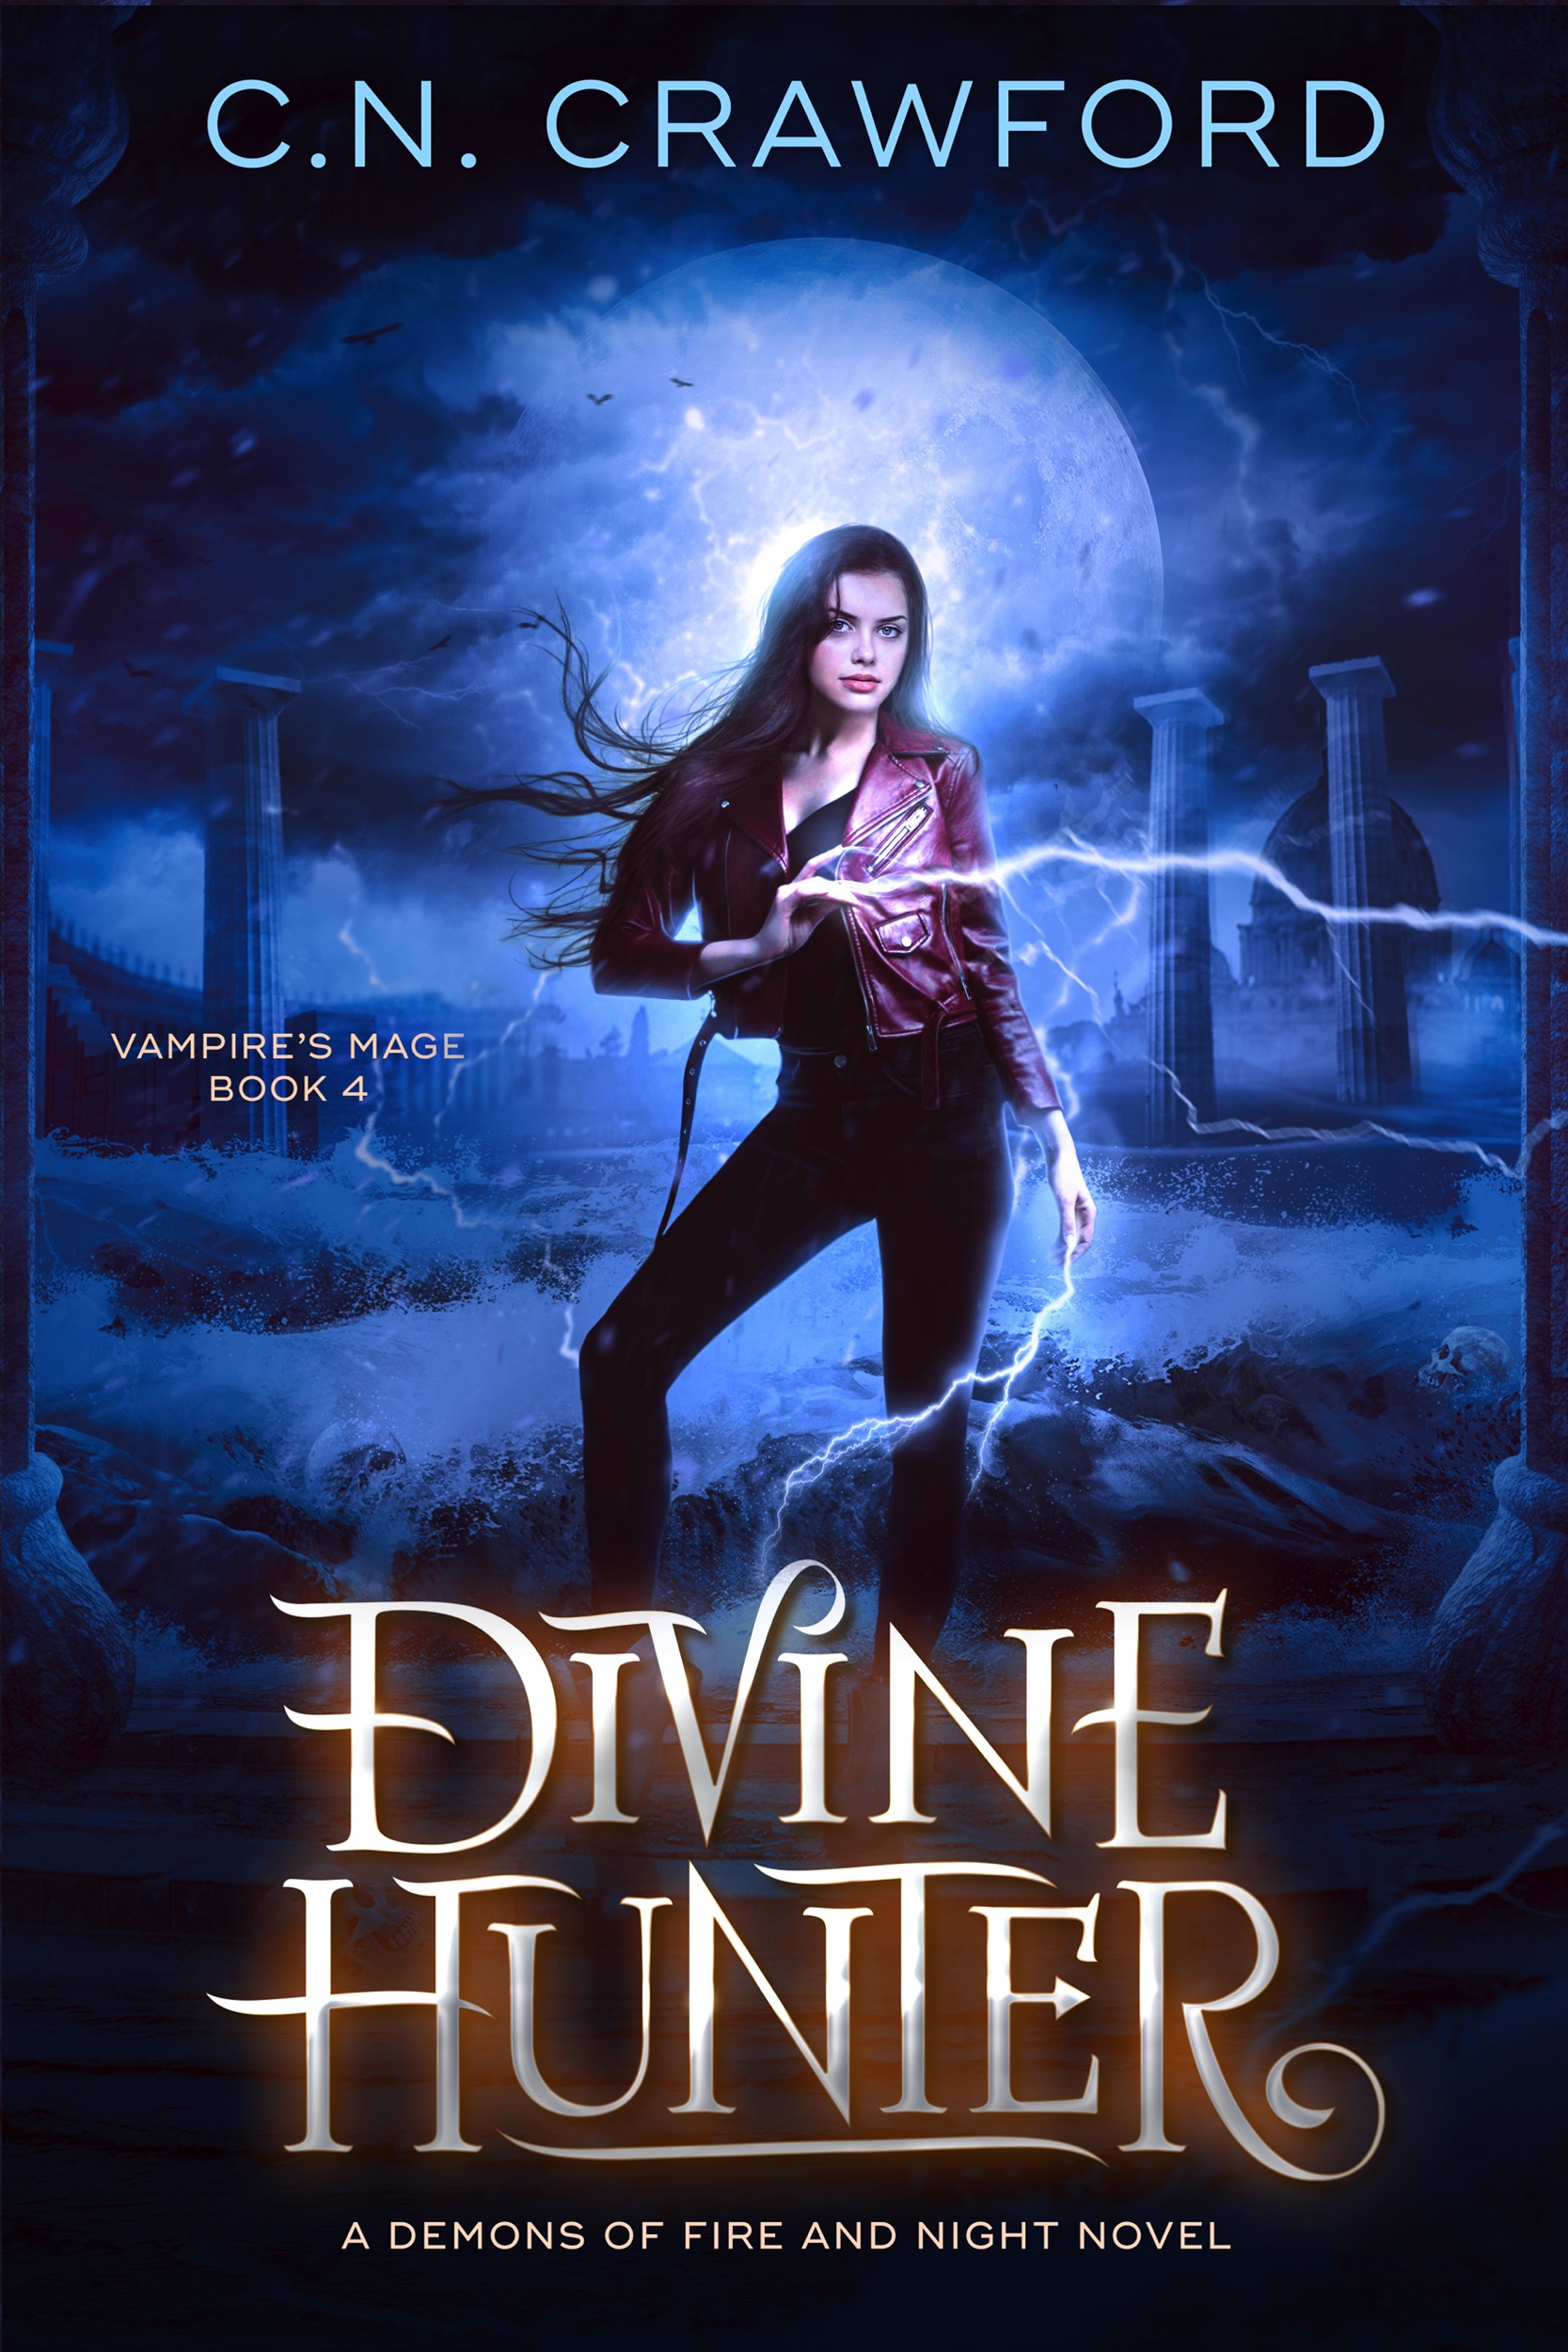 Book 4: Divine Hunter